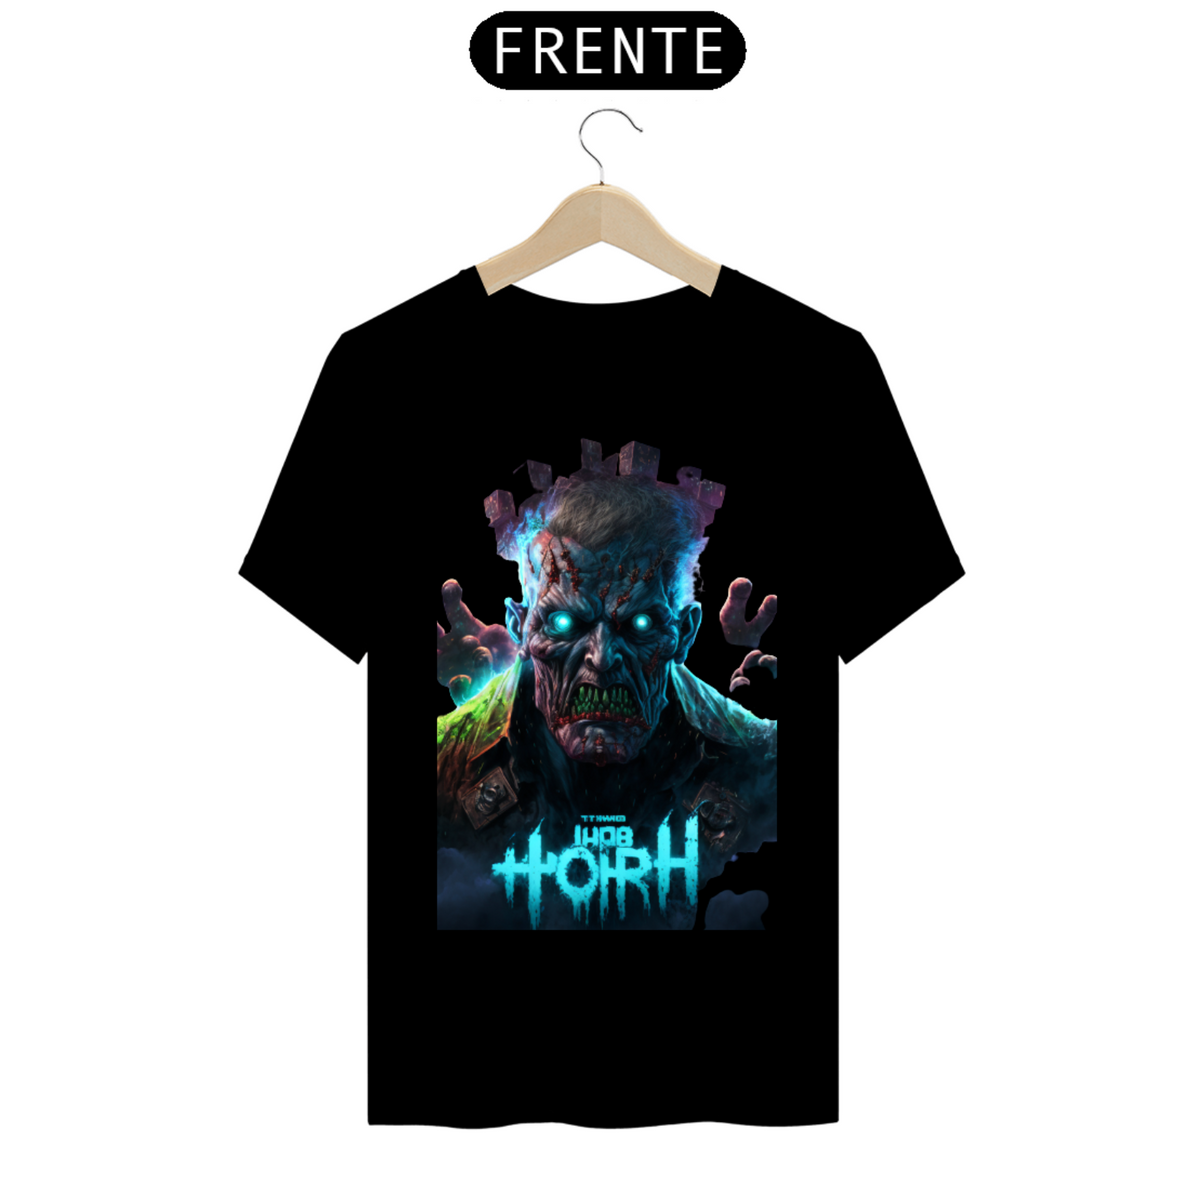 Nome do produto: Camisa masculina Frankstein h.p. lovecraft 